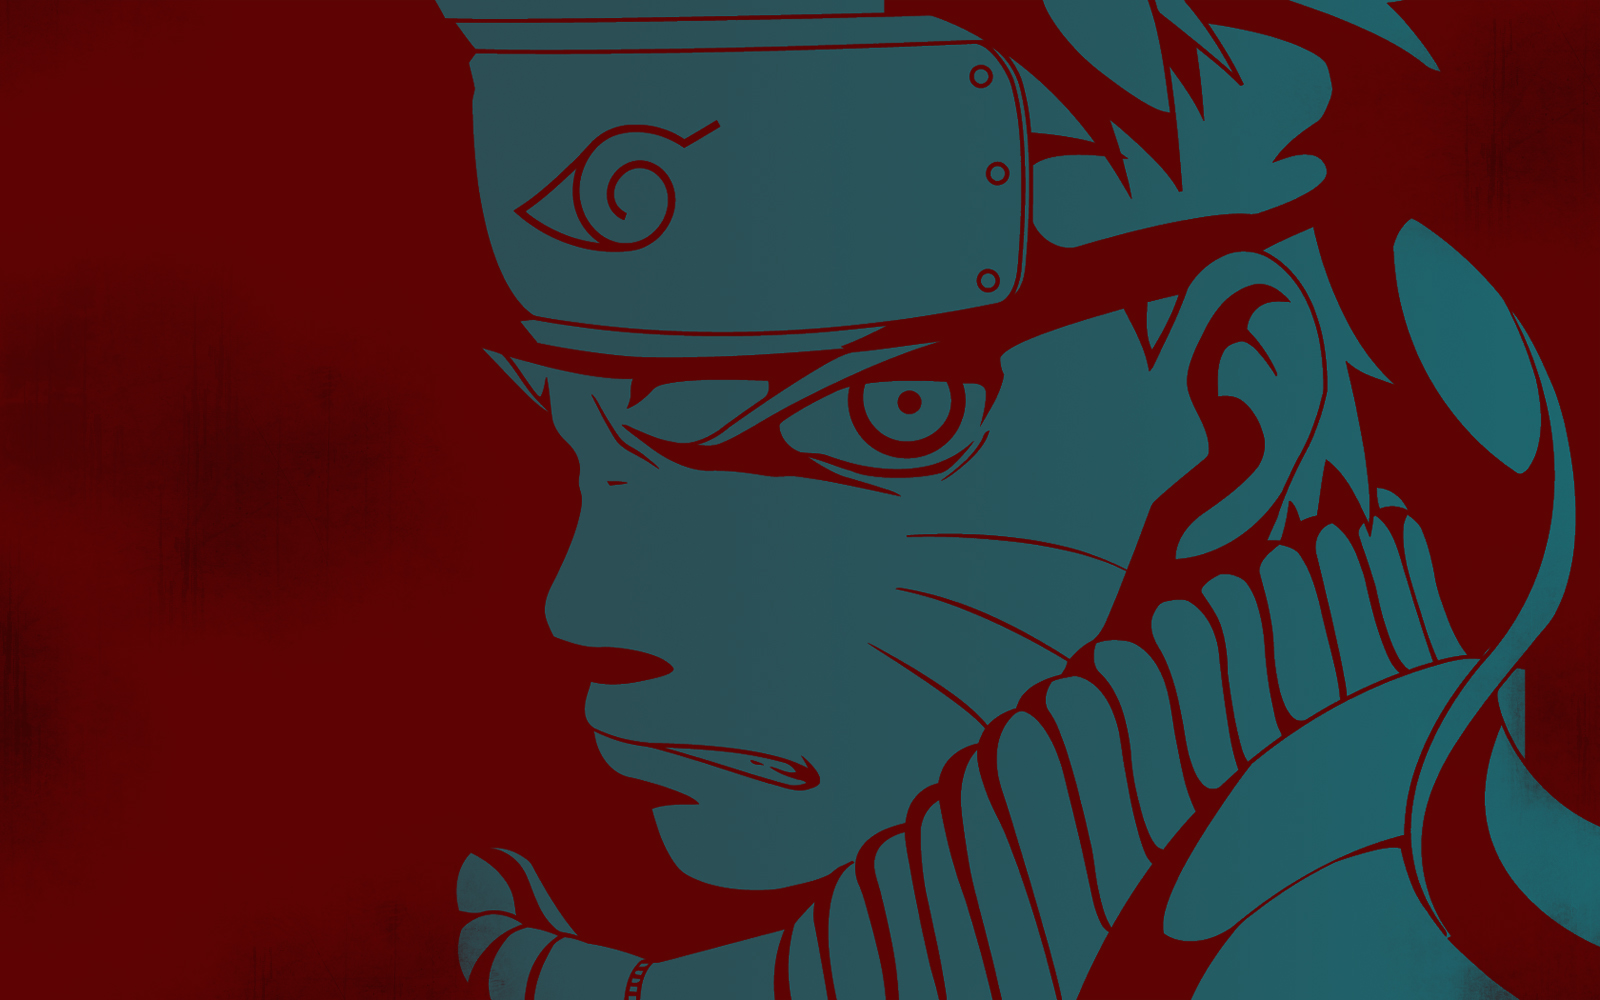 Naruto Uzumaki HD Anime Wallpaper Desktop